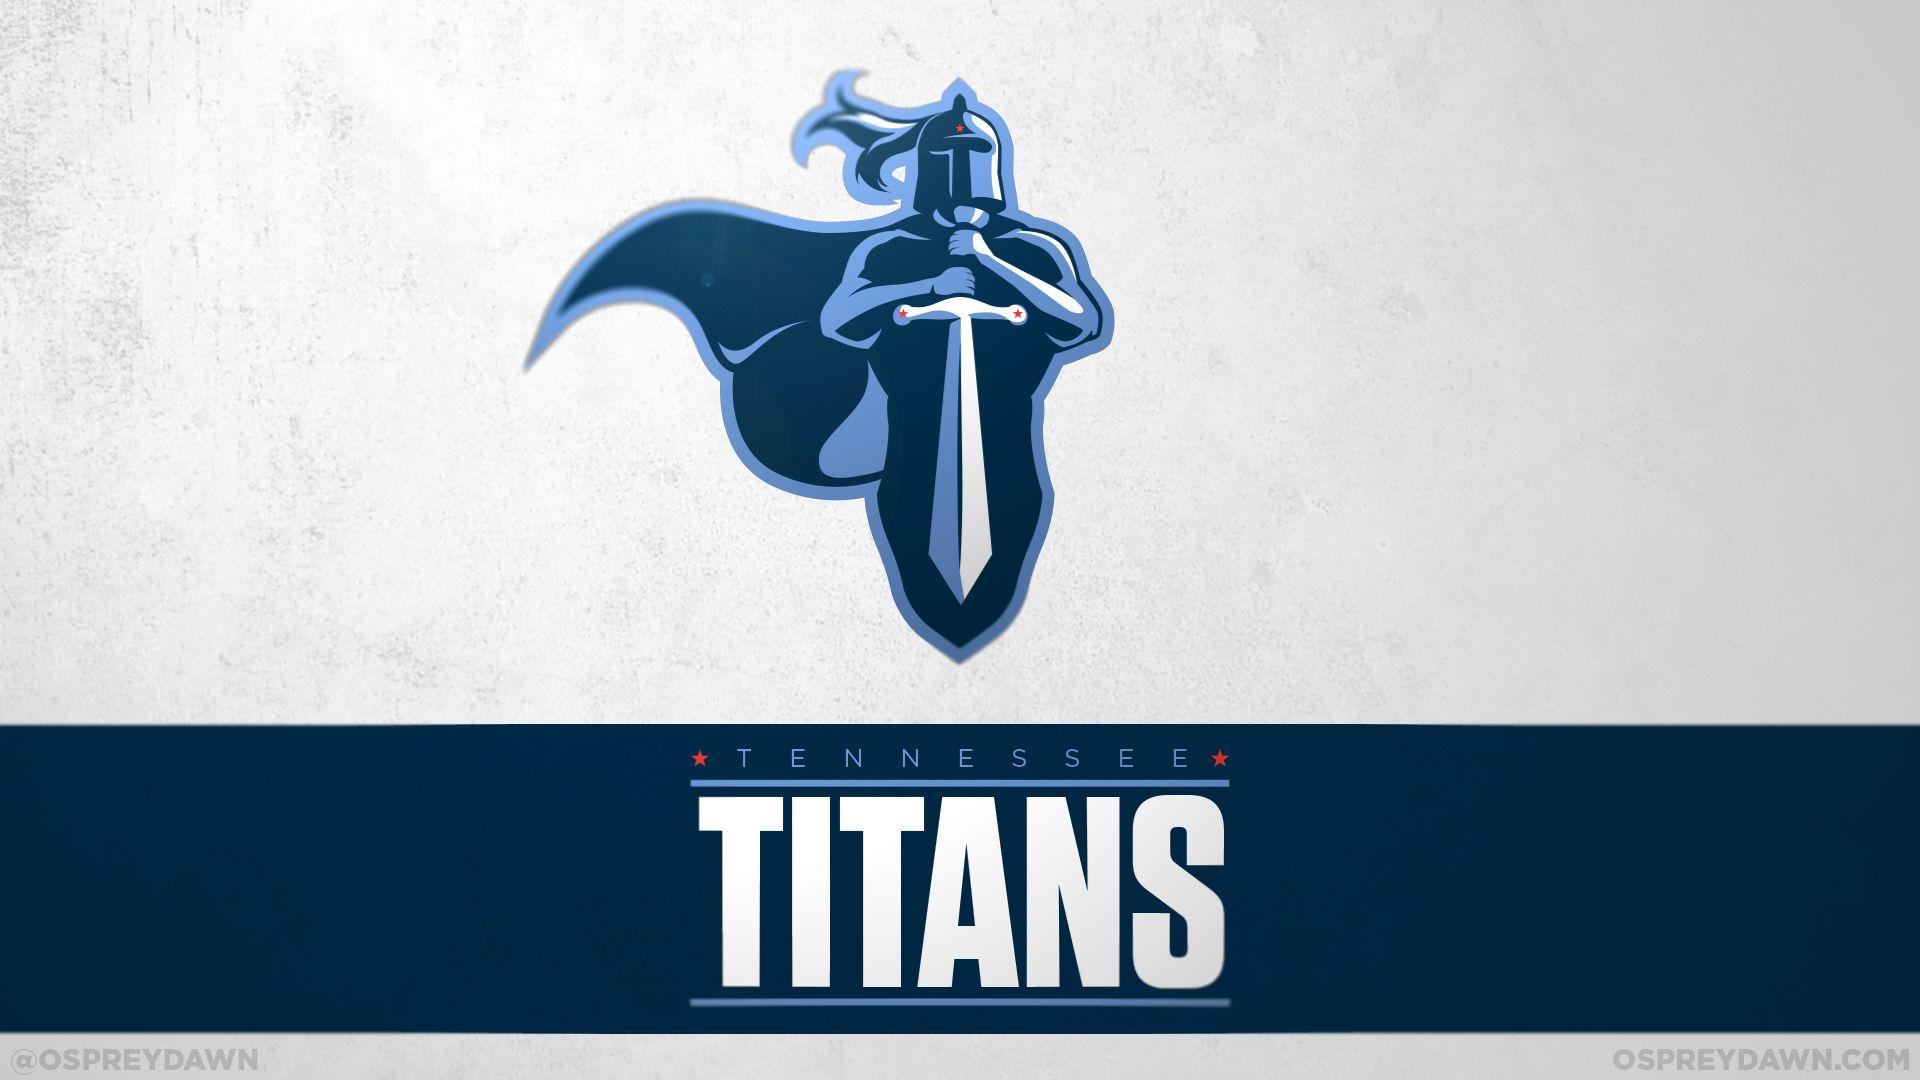 Titans Logo - The Tennessee Titans - Osprey Dawn